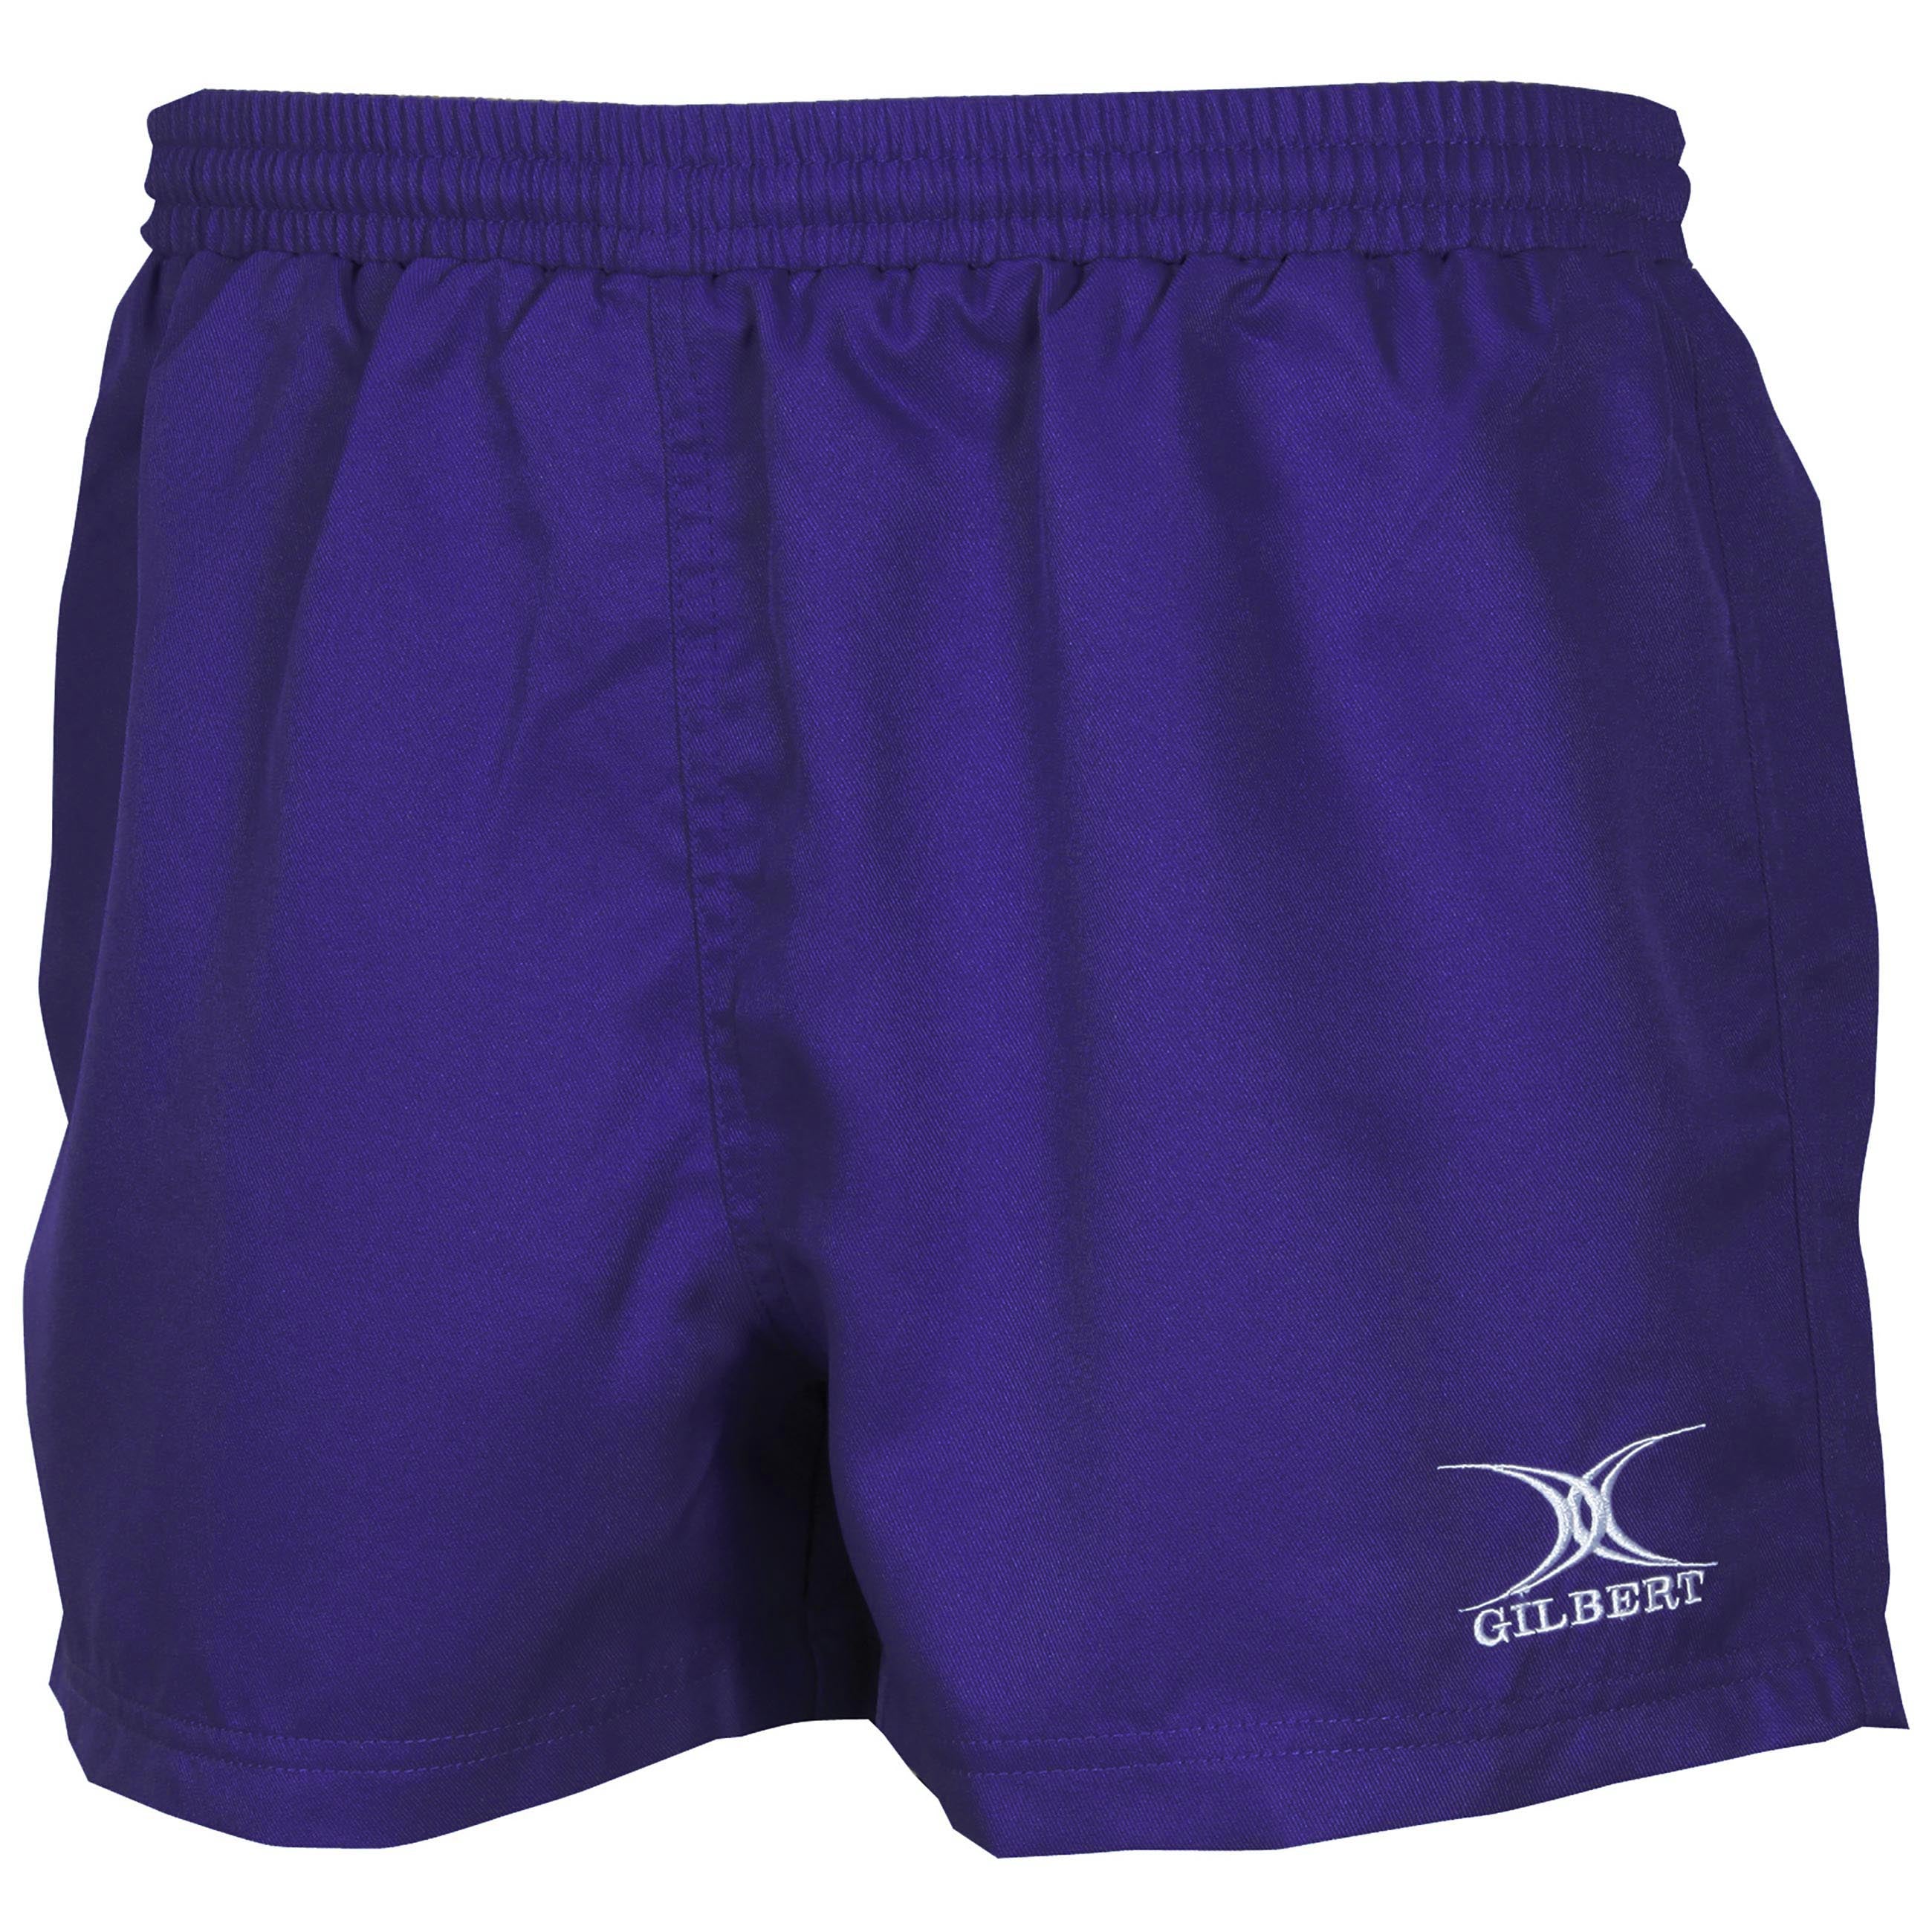 Women's Saracen Match Shorts